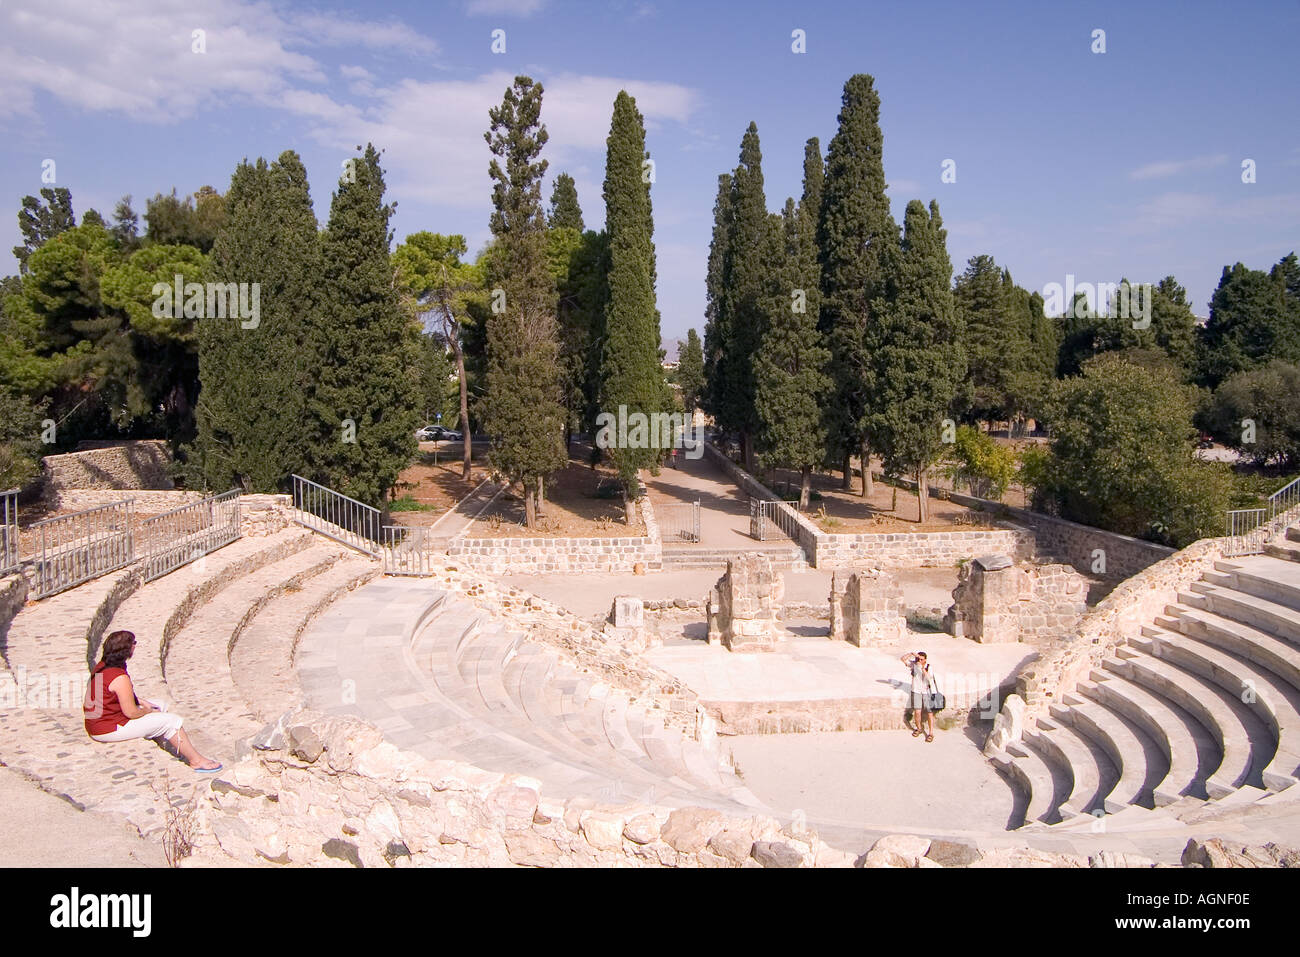 dh Odeon amphitheatre KOS TOWN KOS Tourist person taking a photograph of woman greek amphitheater seats stage roman theatre greece Stock Photo